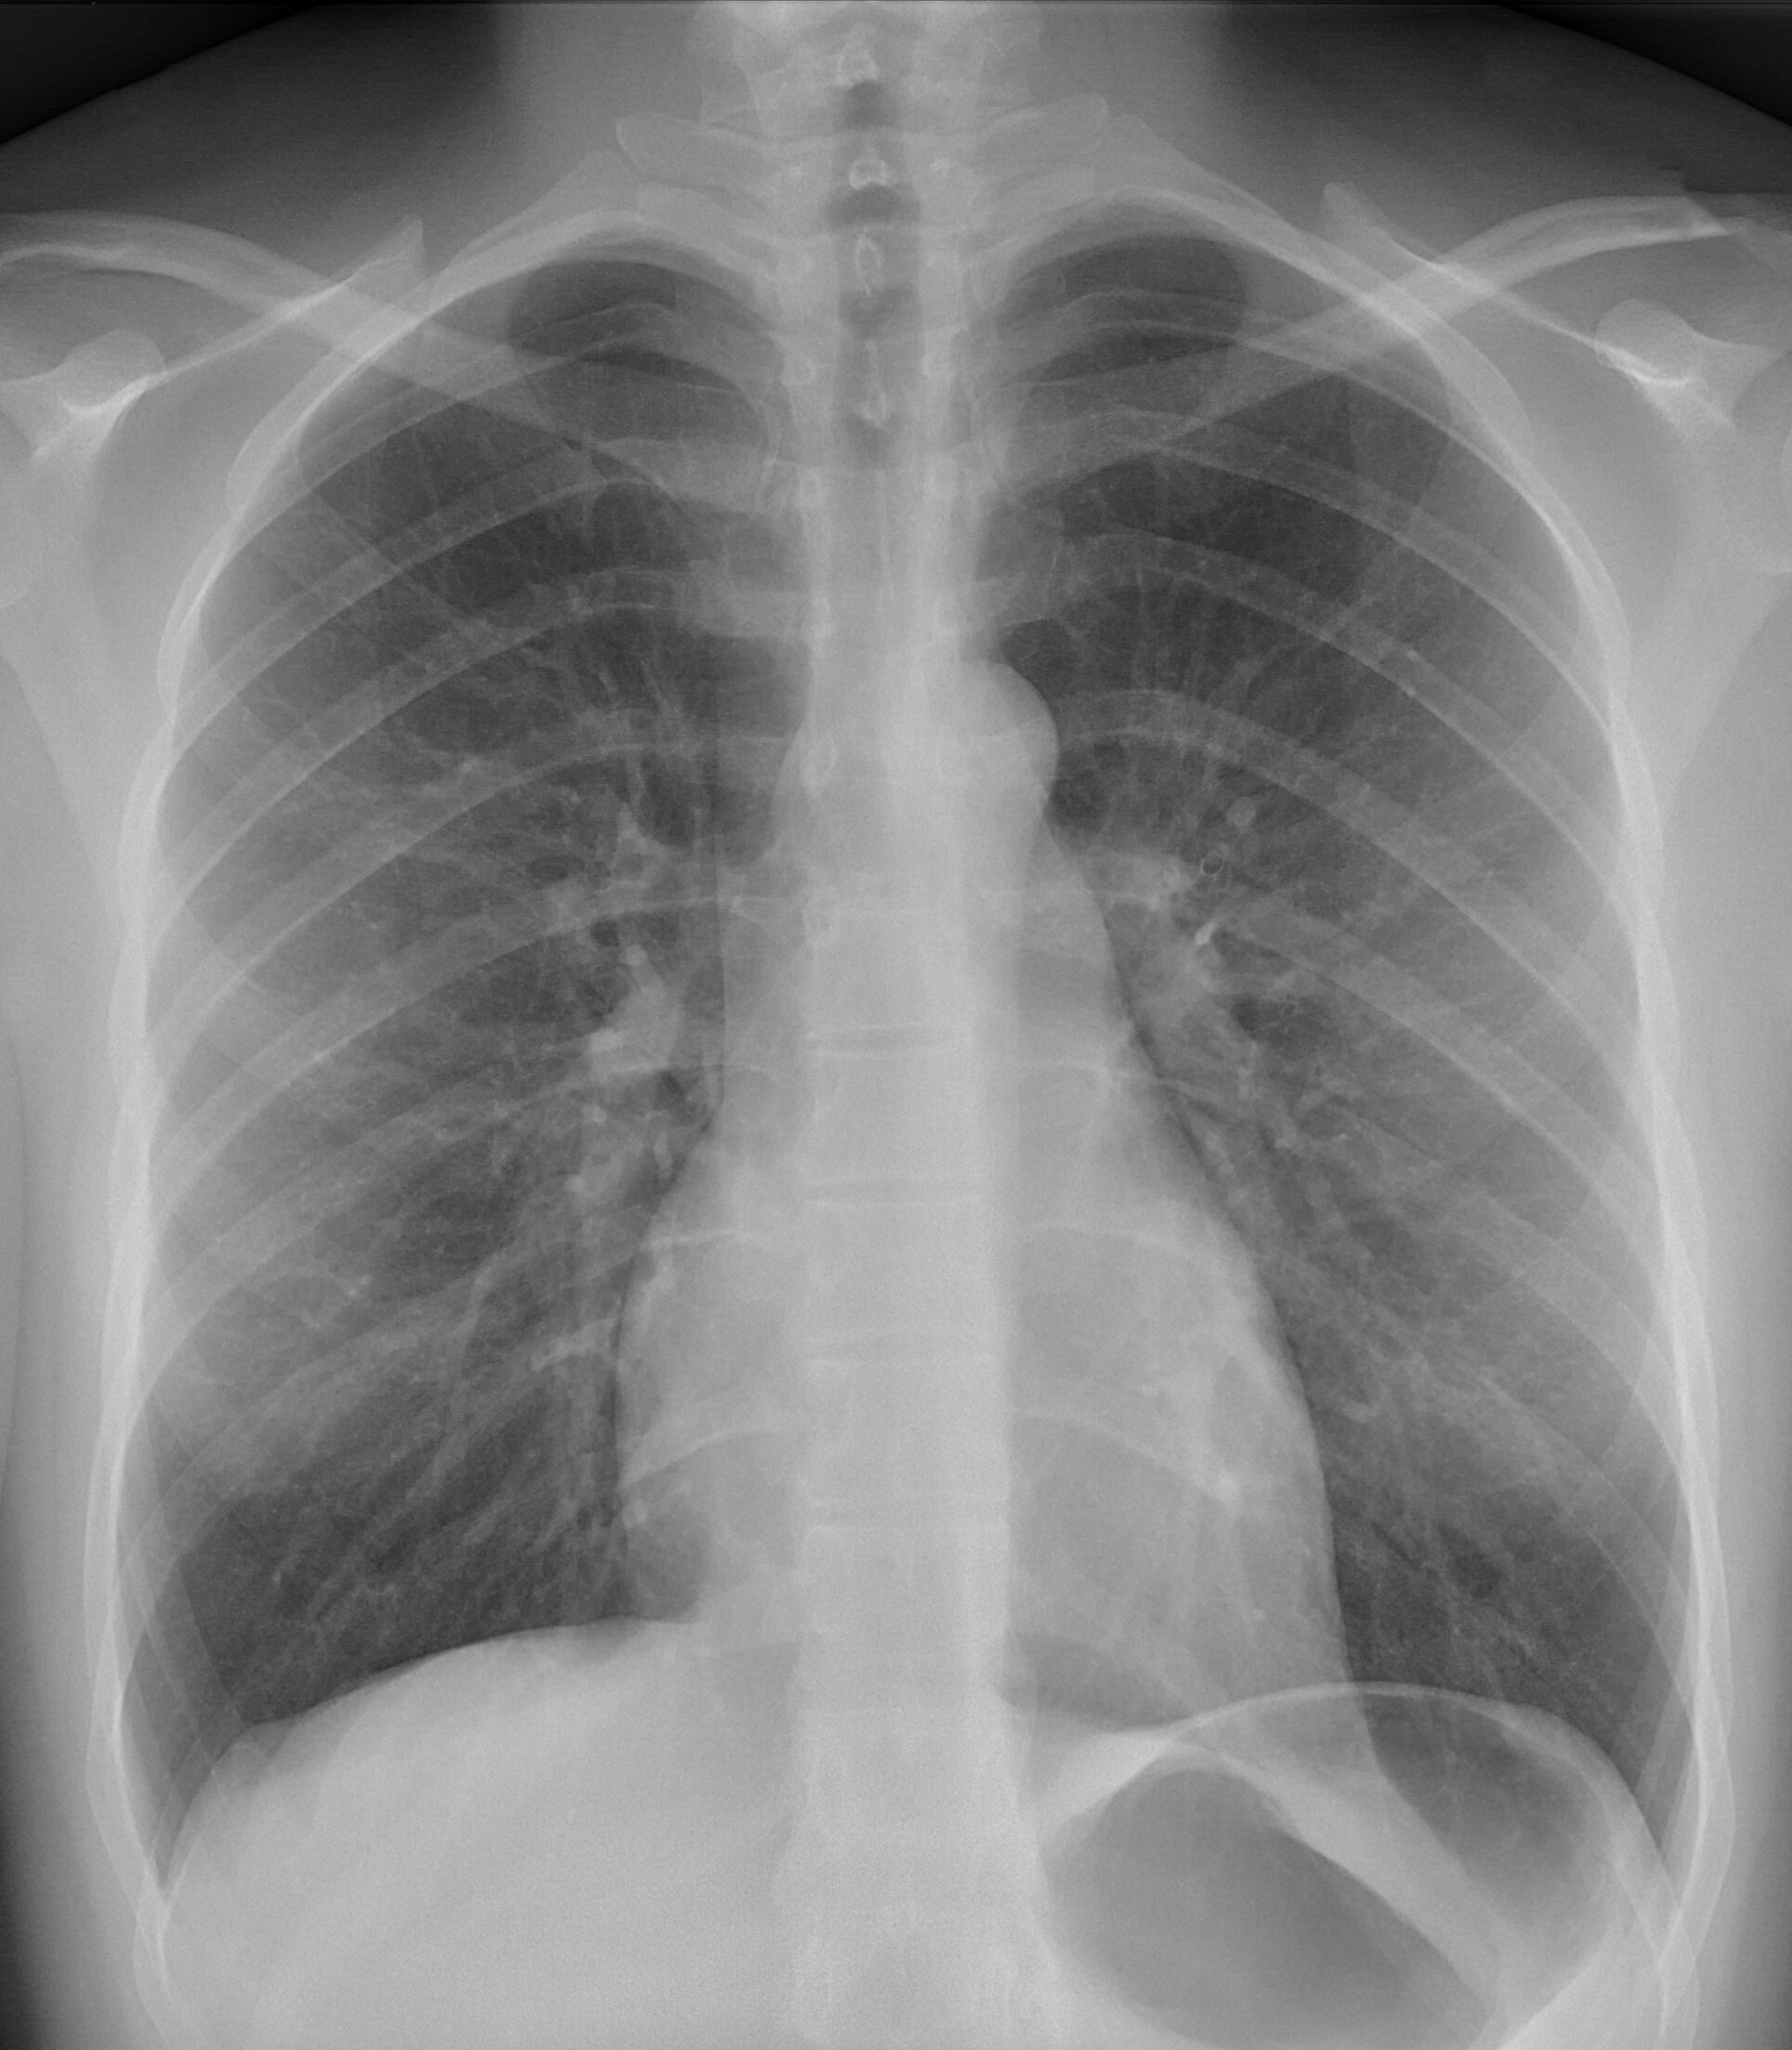 healthy lung.jpg